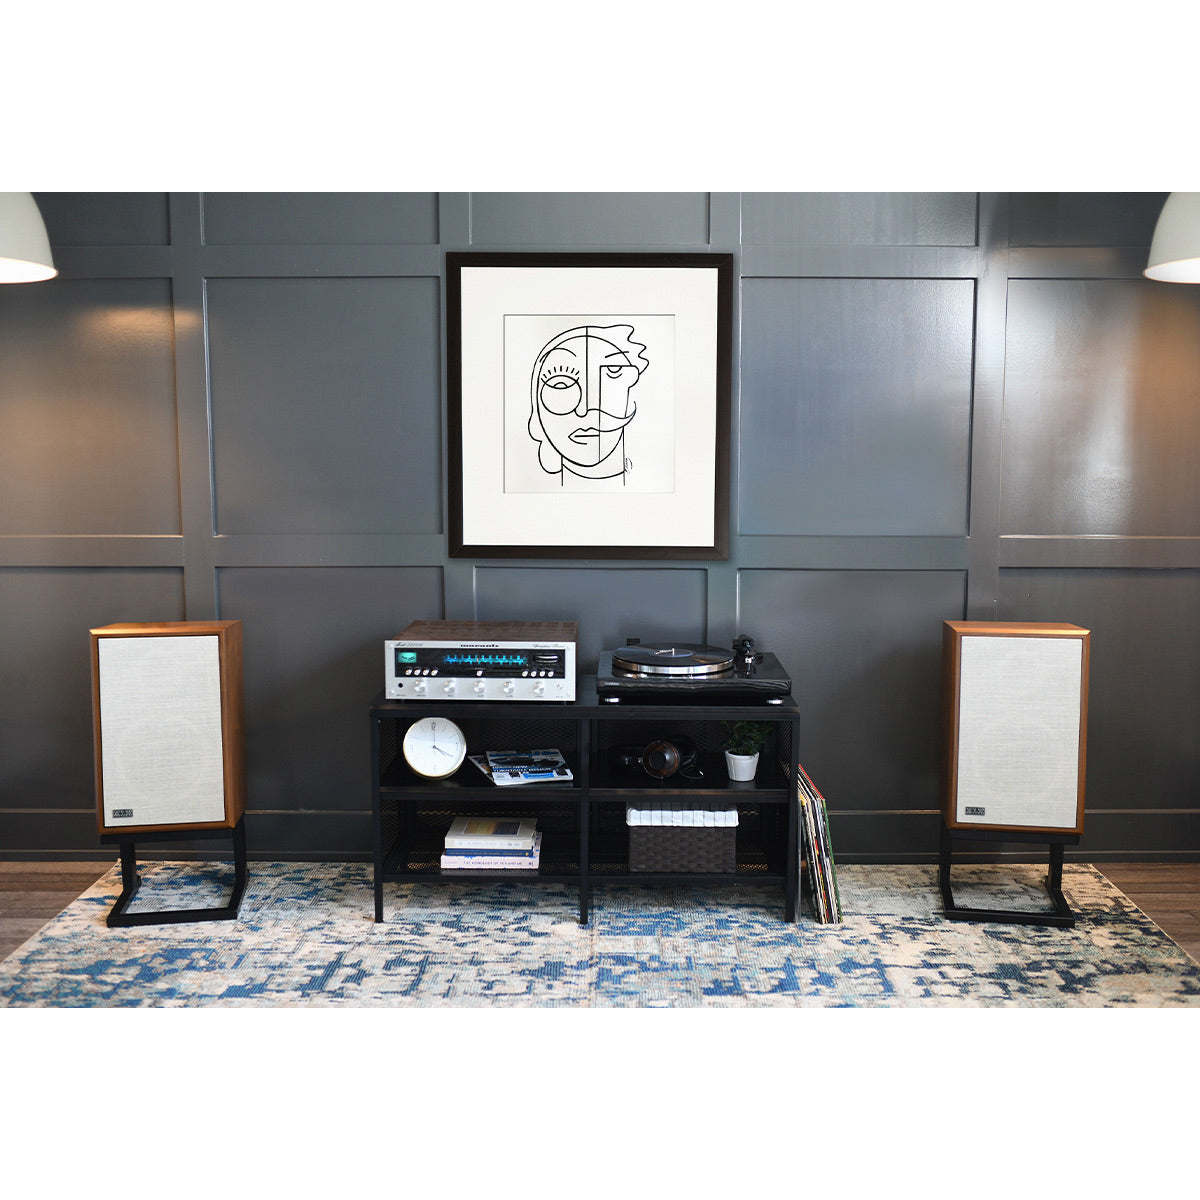 KLH Model Three 2-way 8-inch Acoustic Suspension Bookshelf Speaker - Pair (English Walnut)